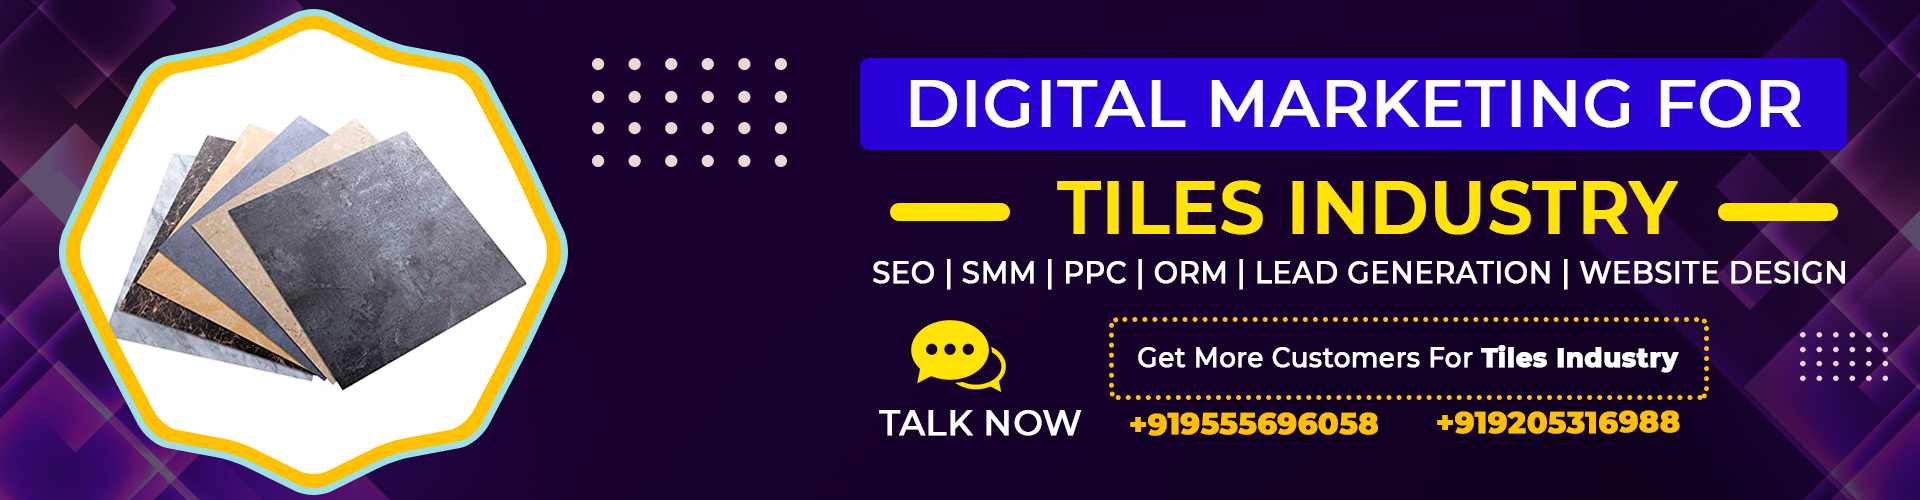 digital-marketing-for-tiles-industry